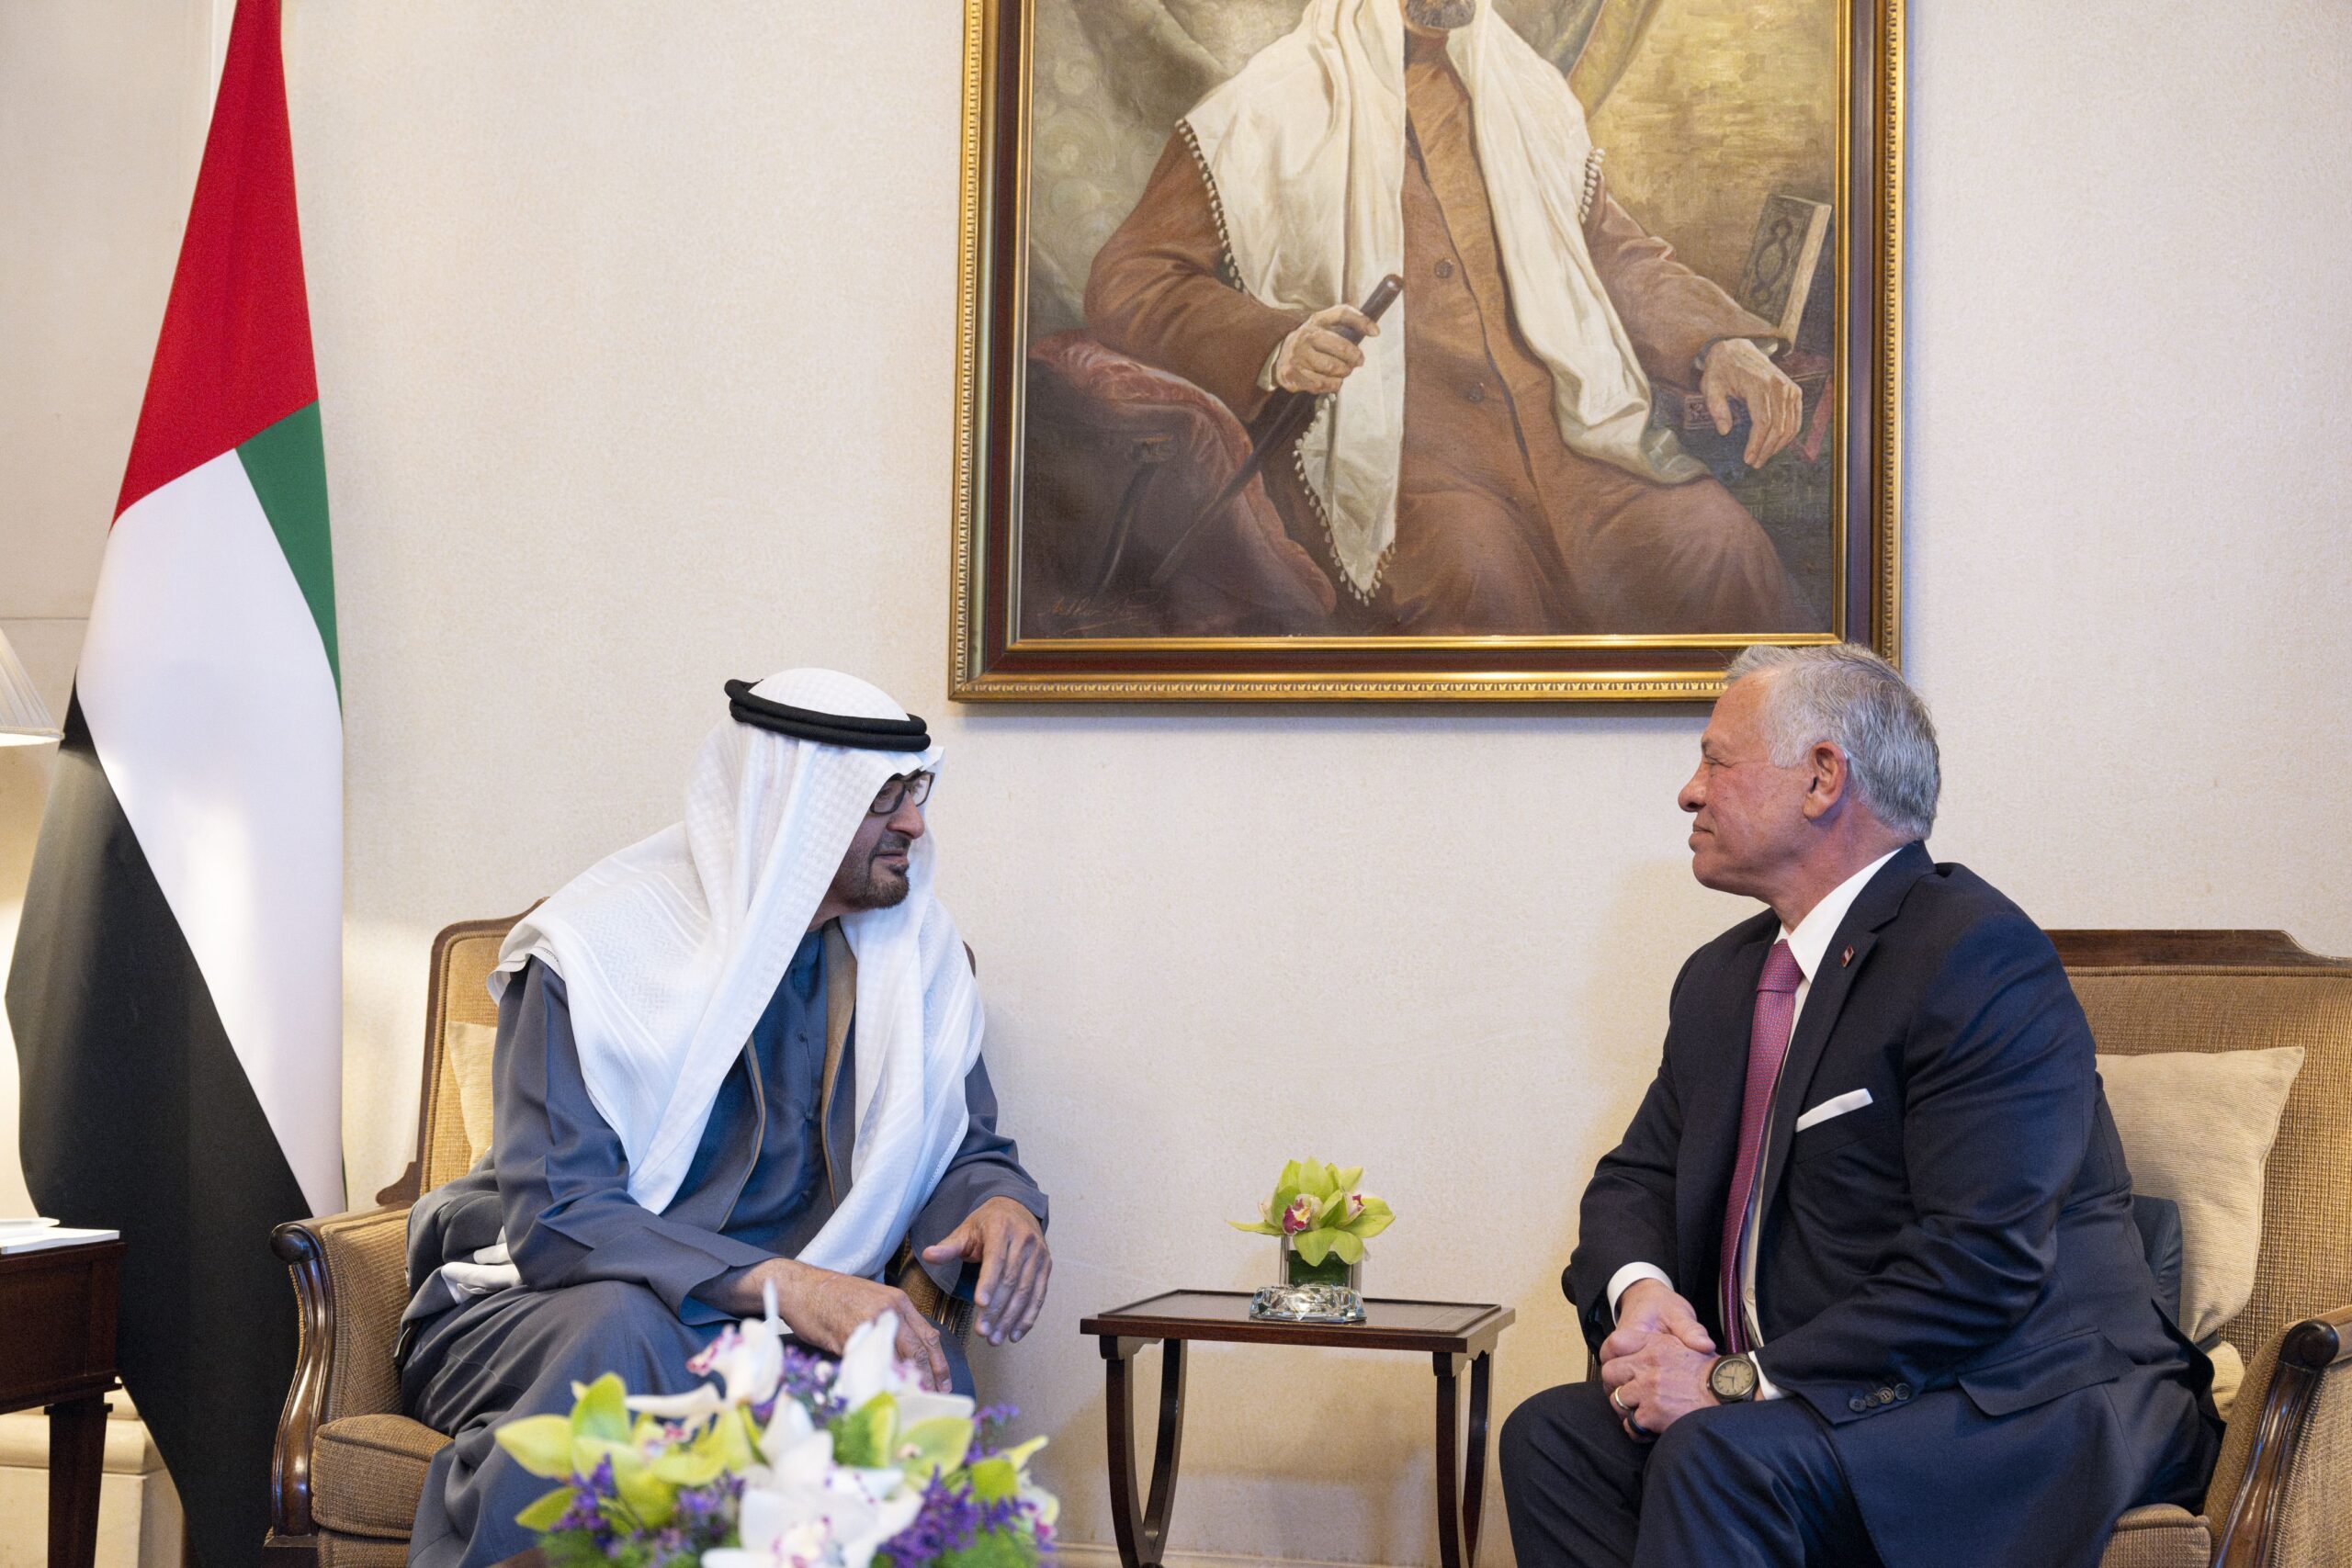 UAE president Sheikh Mohamed bin Zayed Al Nahyan meets with Jordan's King Hussein in Amman